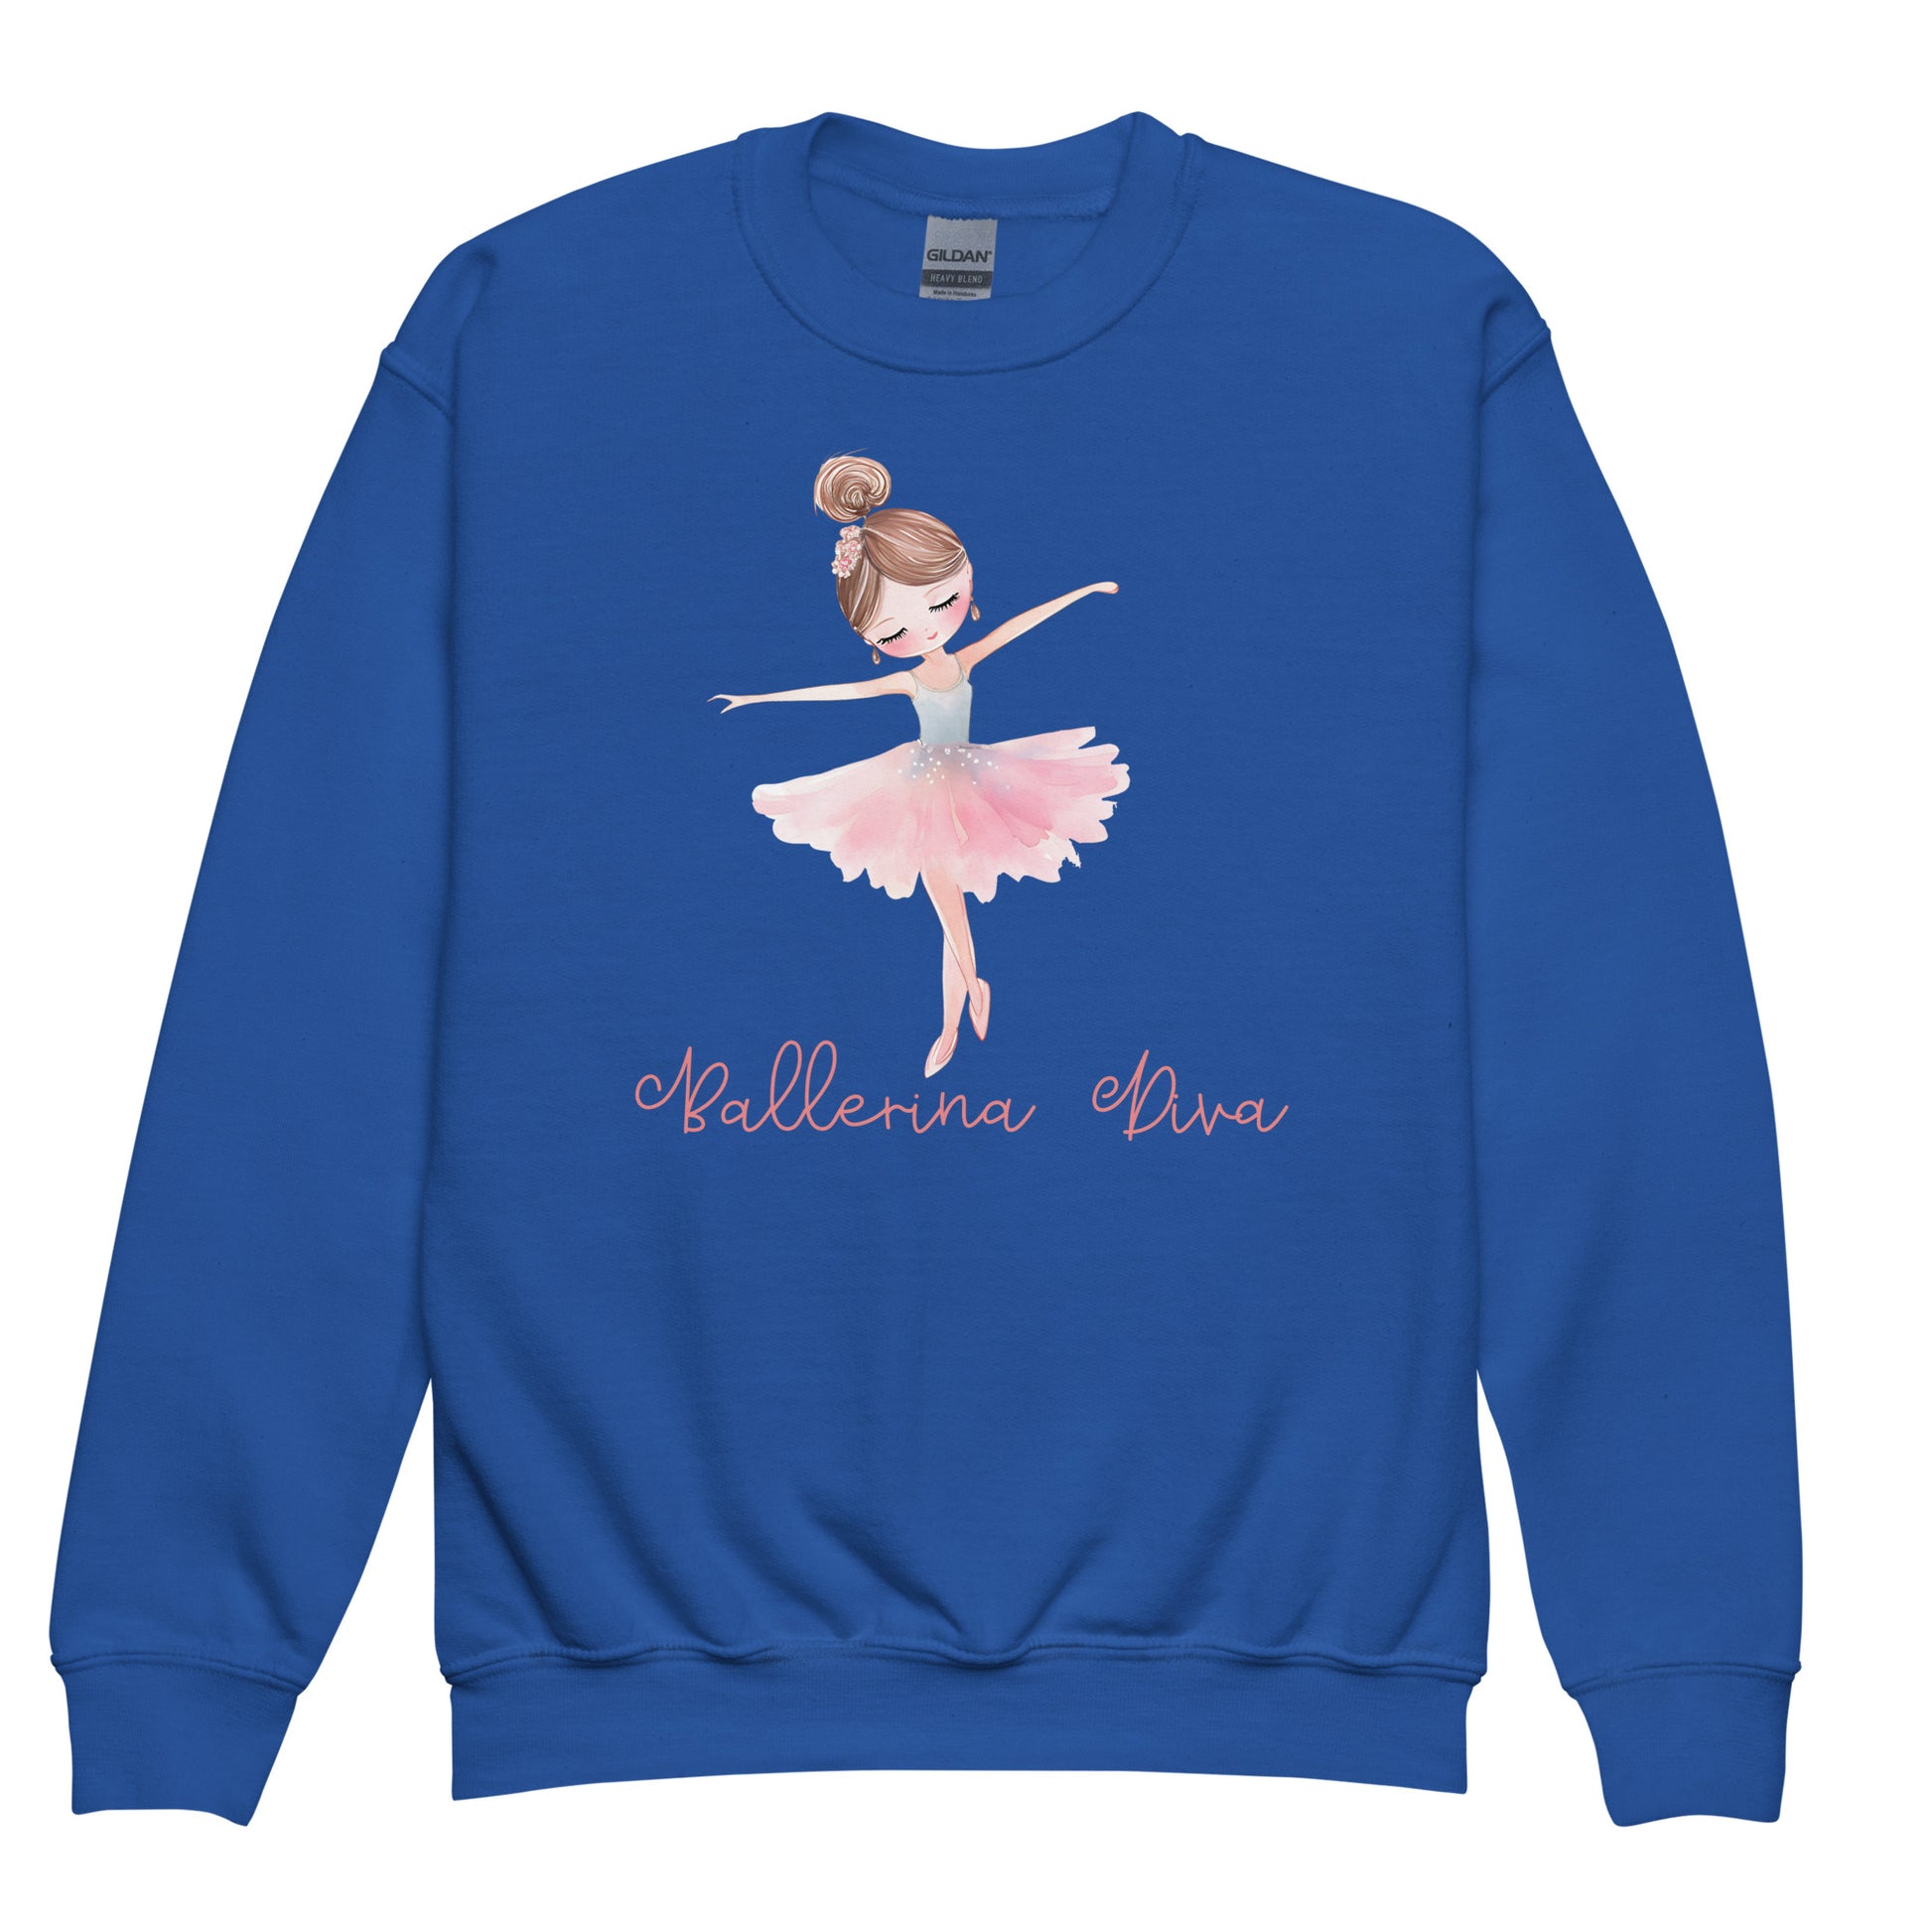 Kids Royal Blue Sweatshirt - Ballerina Diva, Ballerina Graphic Front View